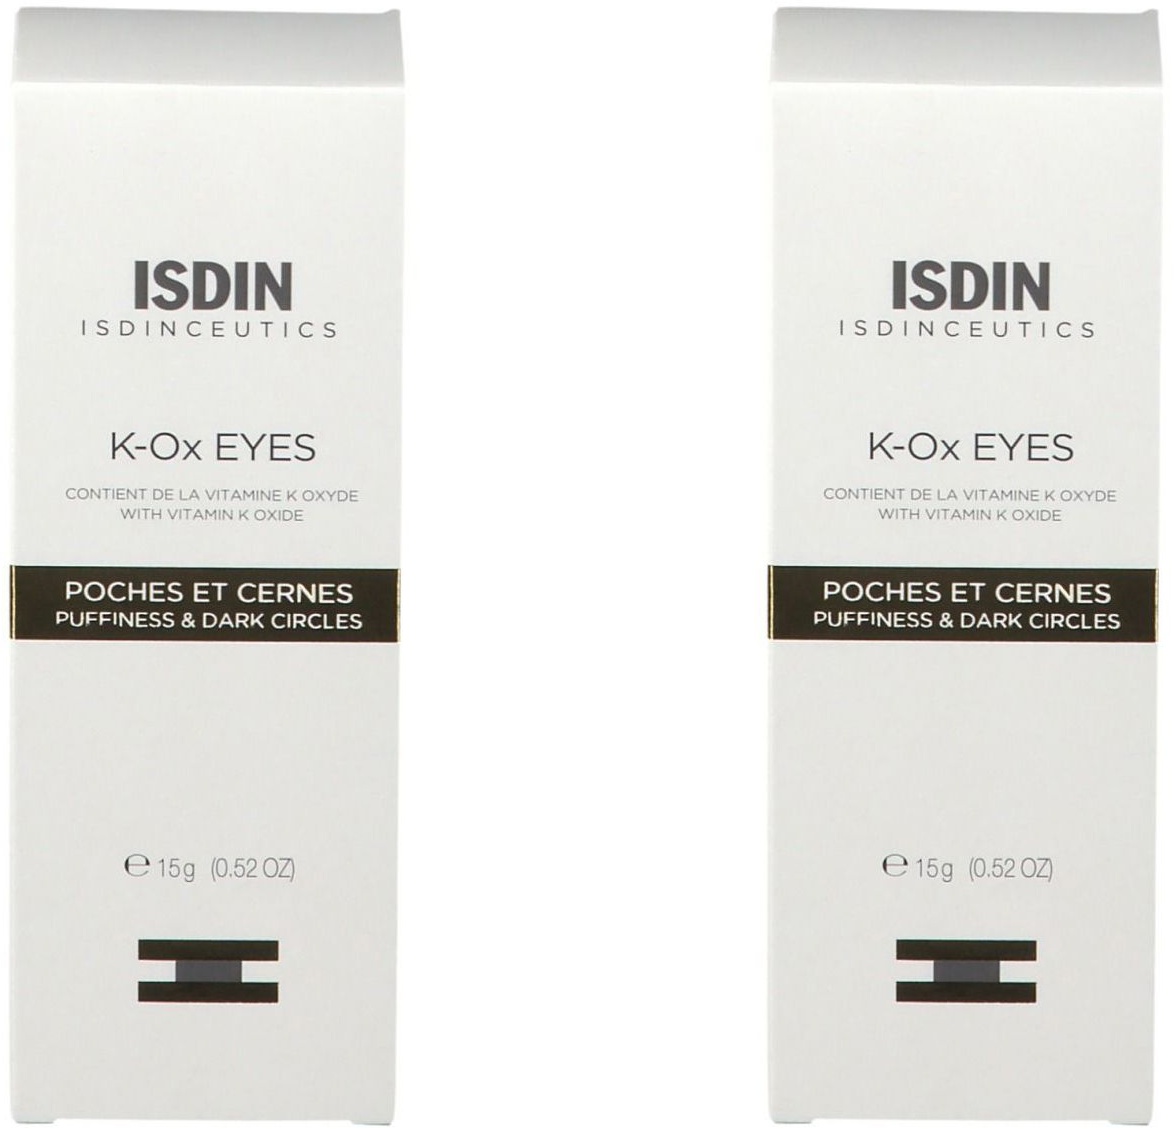 ISDIN® Isdinceutics K-Ox Eyes 2x15 g crème ophtalmique